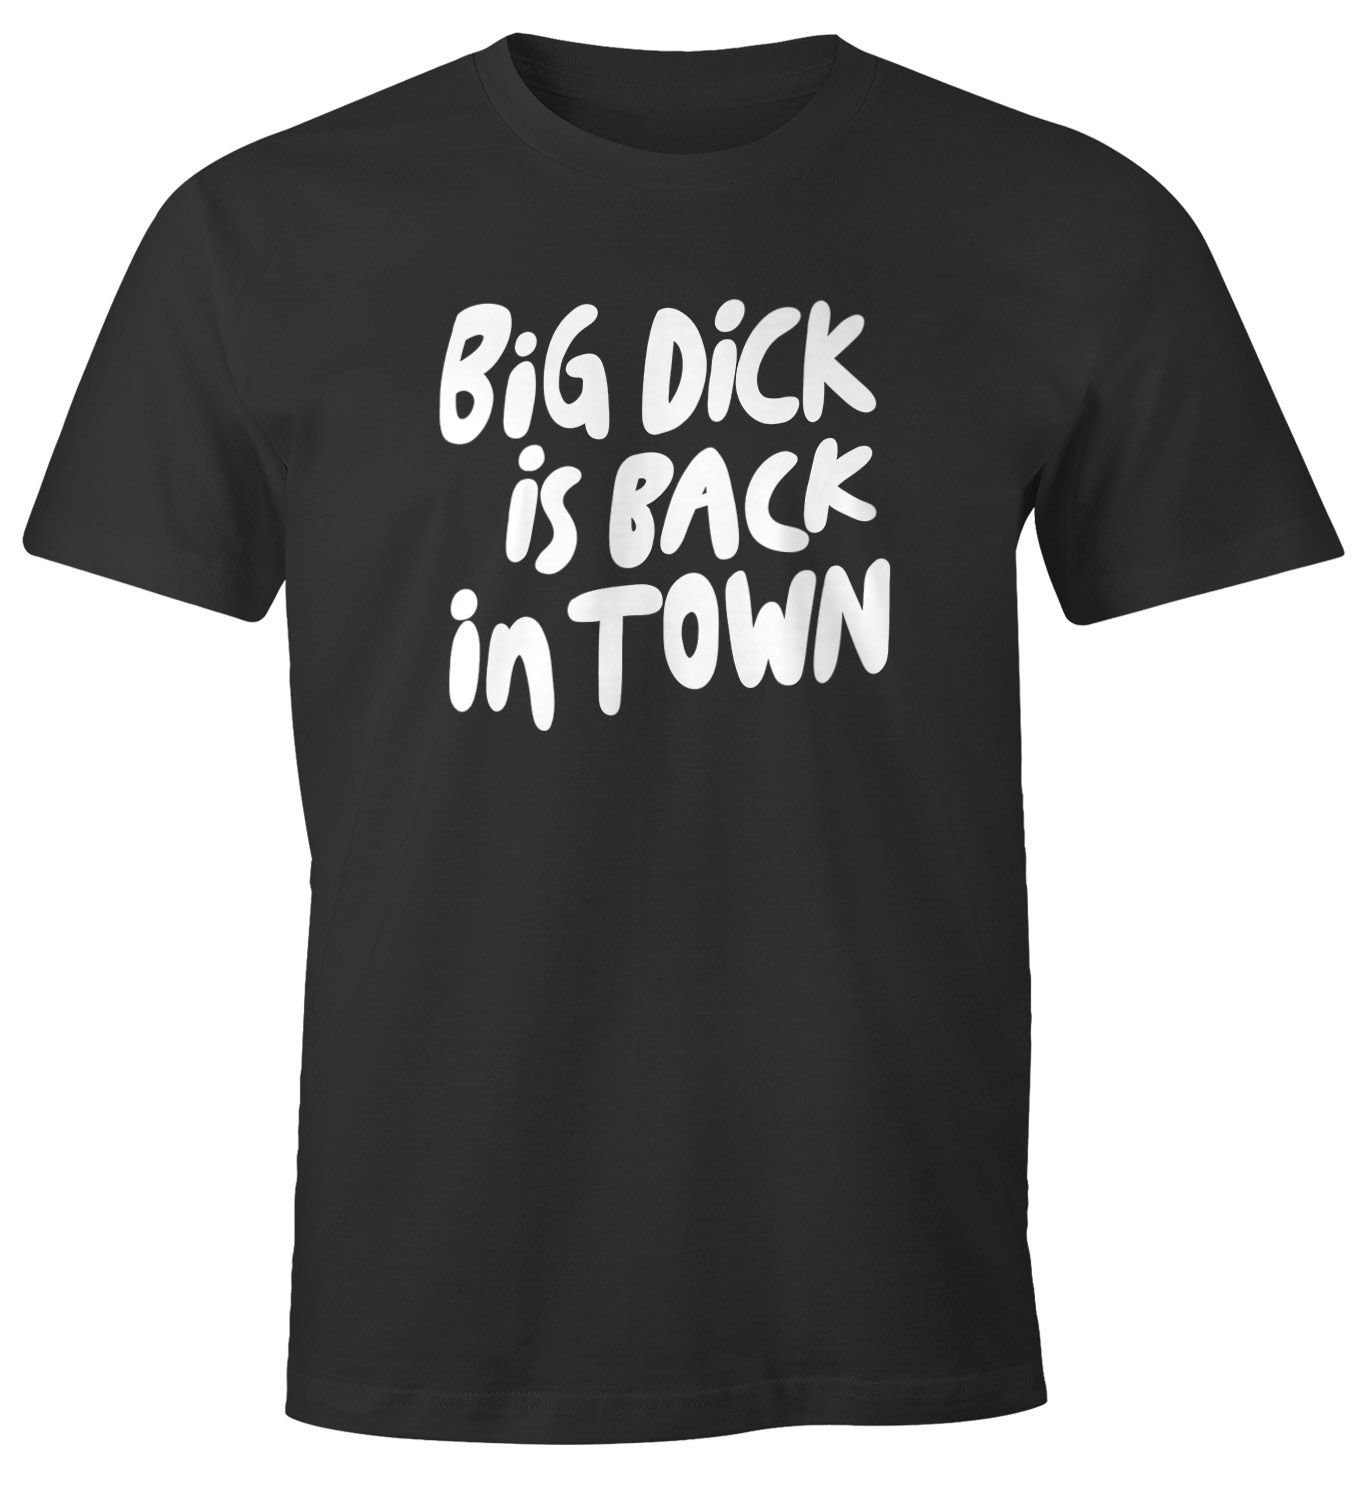 MoonWorks Print-Shirt Herren T-Shirt mit Spruch lustig Big Dick is back in Town Ironie Fun-Shirt Moonworks® mit Print schwarz